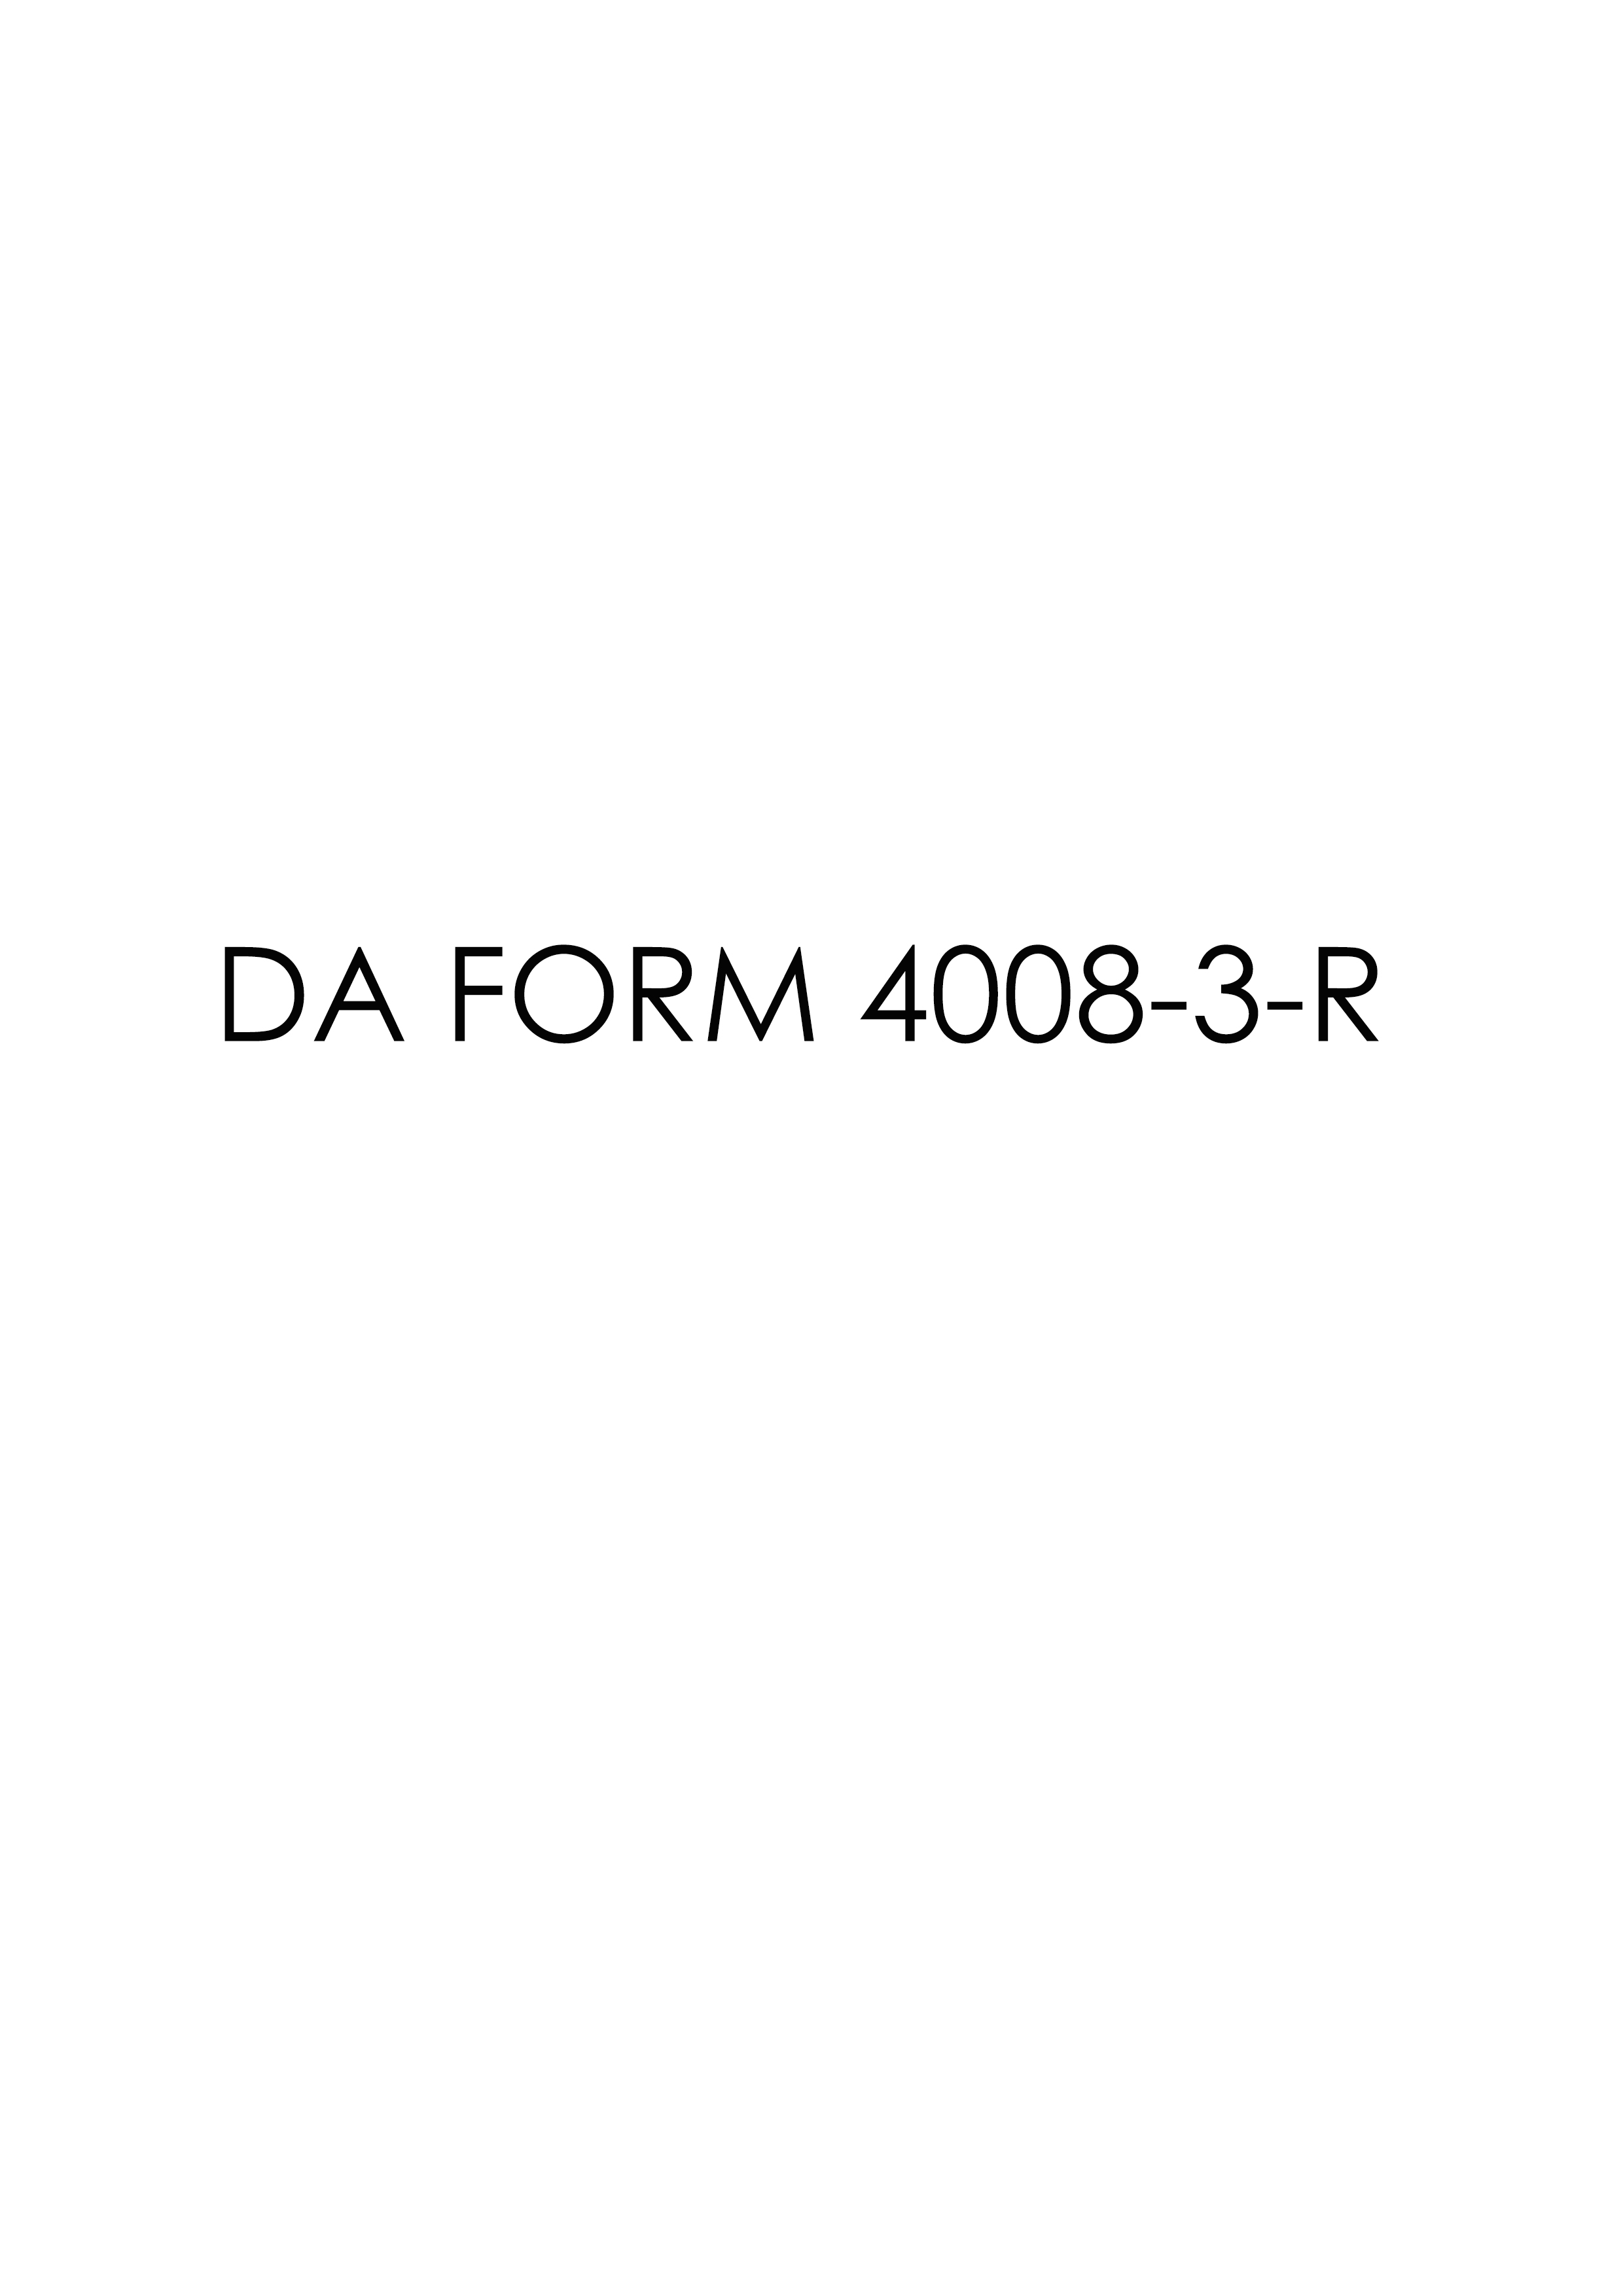 da Form 4008-3-R fillable